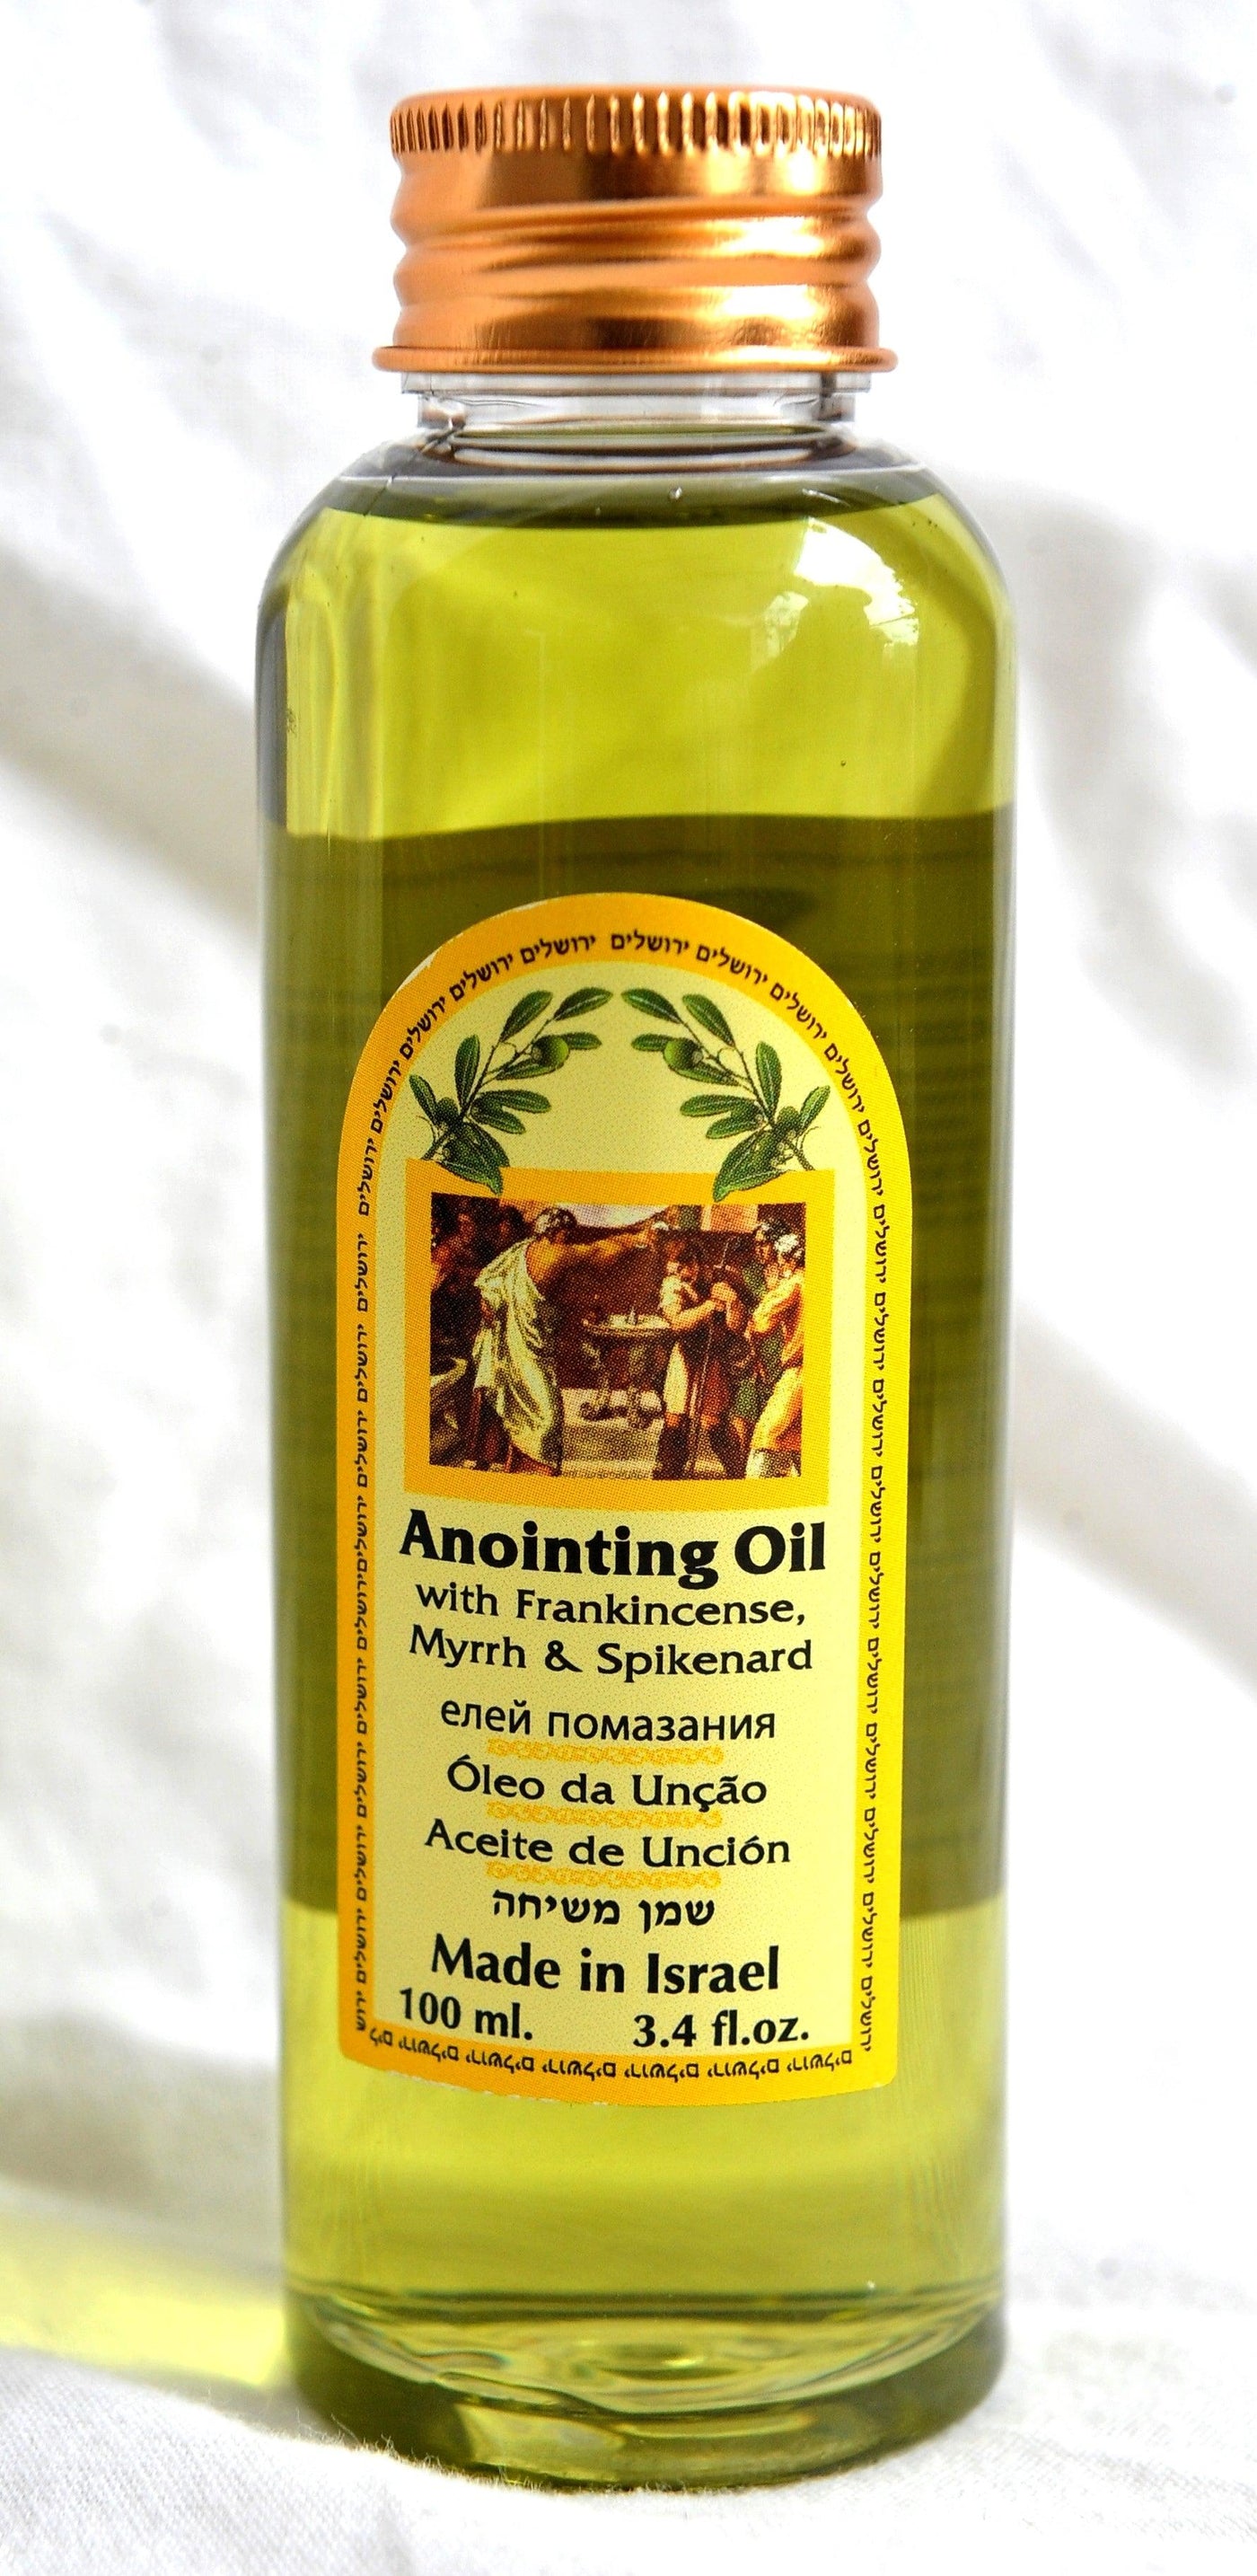 Blessed 24:7 Anointing Oil (Frankincense & Myrrh) inside Antique